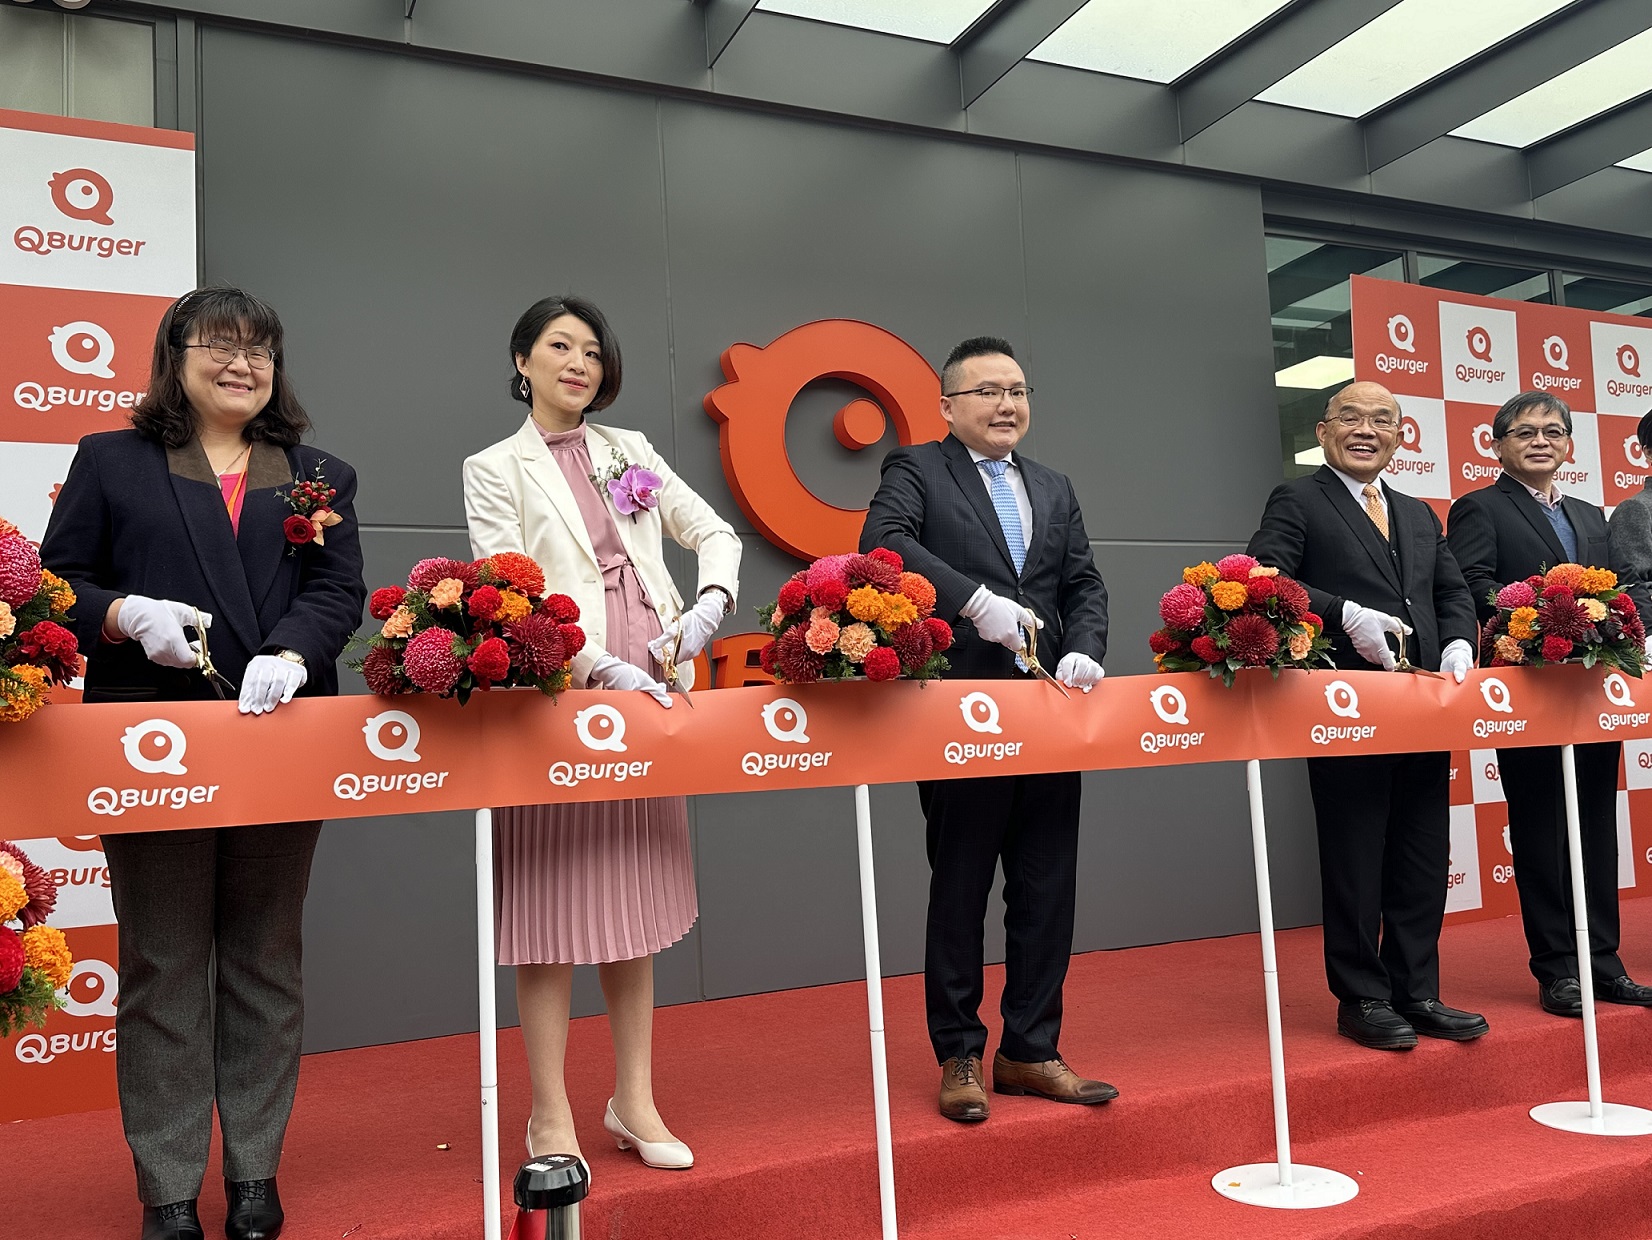 Q Burger斥資12億元打造1100坪台灣營運總部 導入數位智慧化管理系統 數位轉型再升級